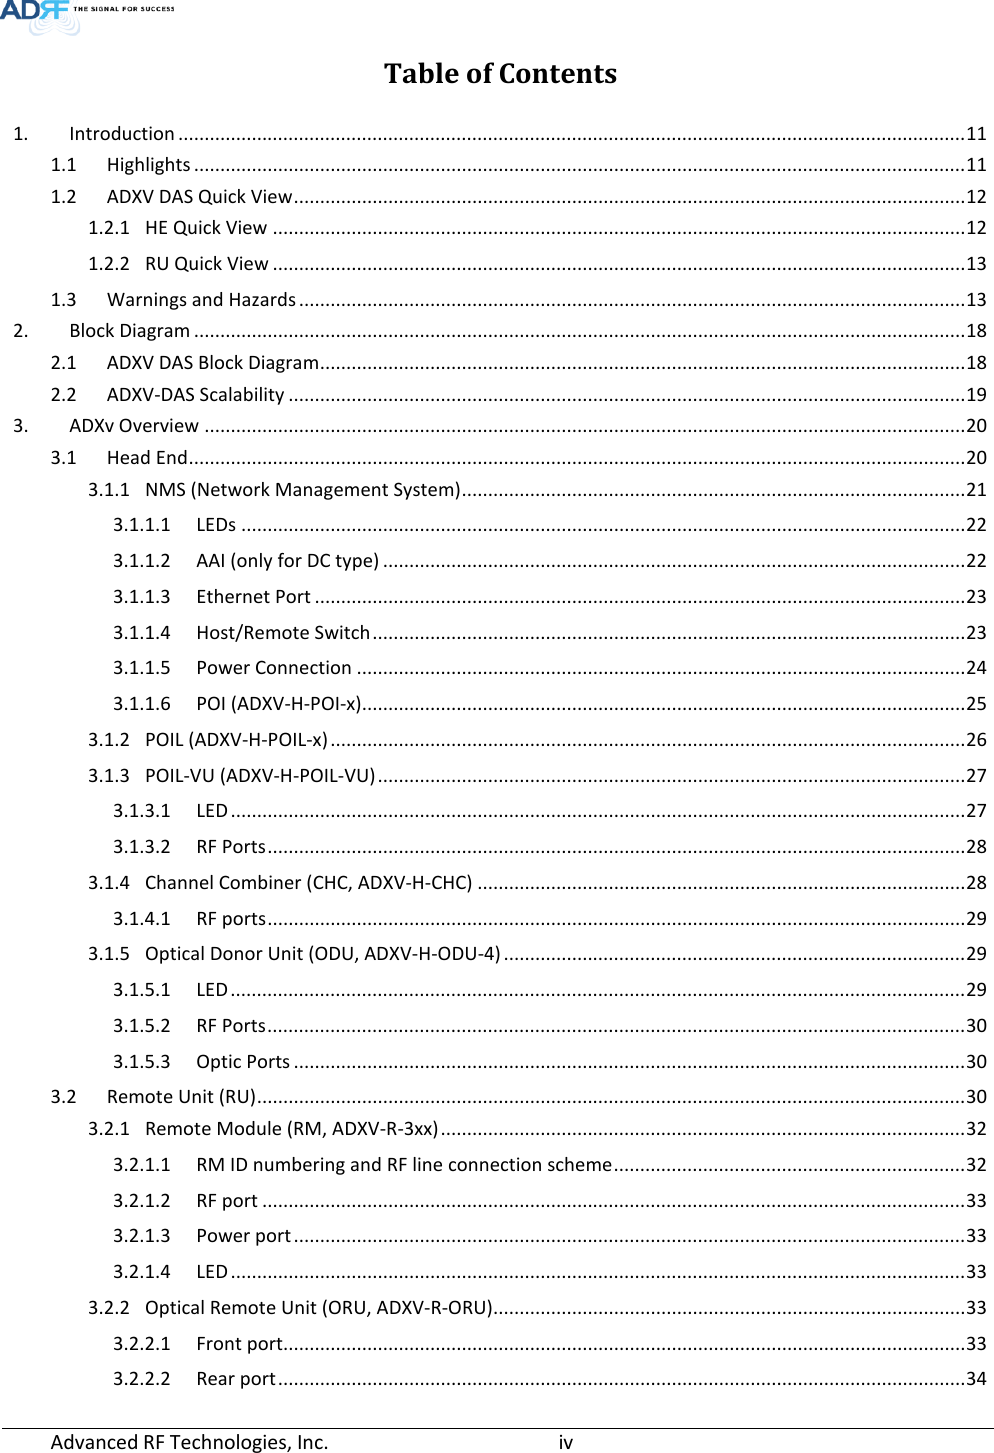 Page 4 of ADRF KOREA ADXV-R-336 DAS (Distributed Antenna System) User Manual ADXV DAS